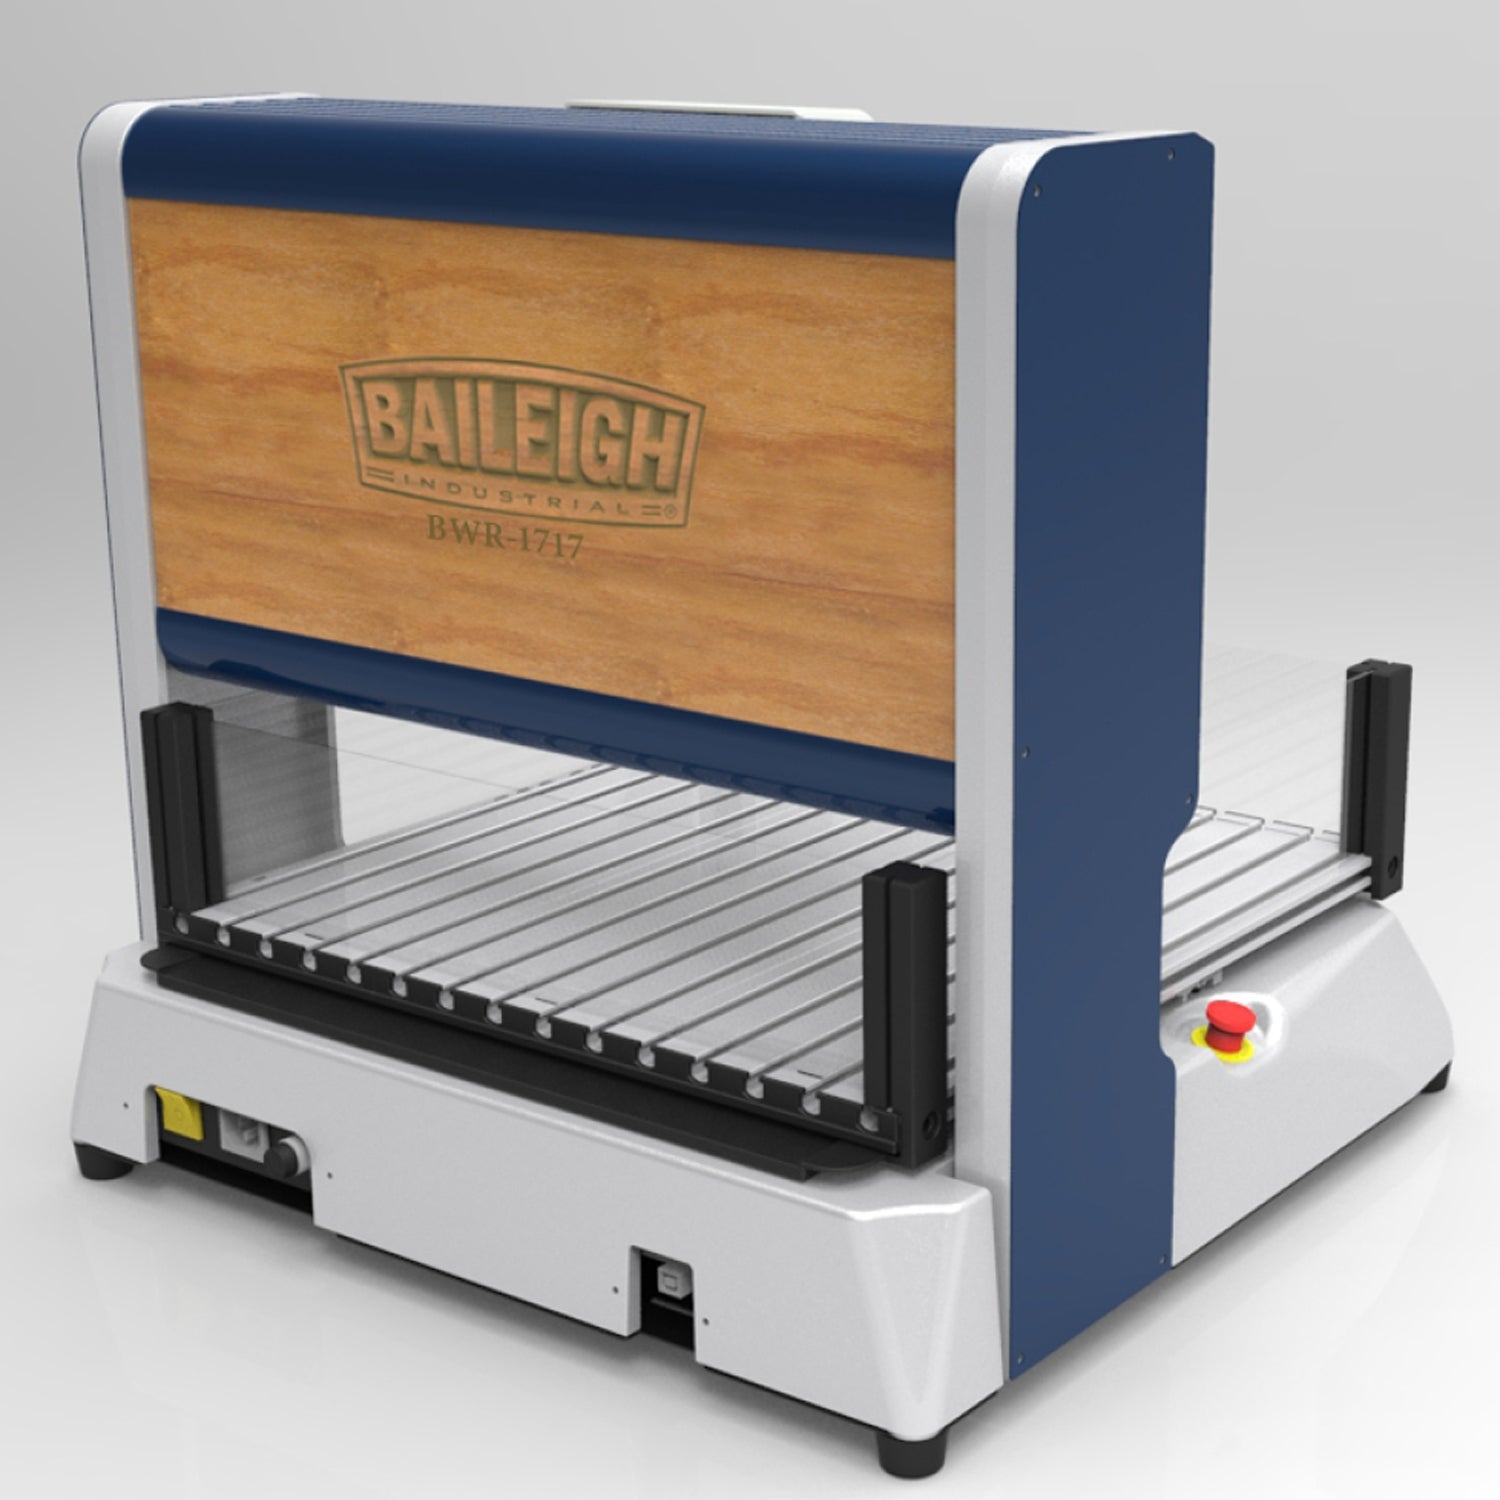 Baileigh DEM-1717 110V 17" x 17" CNC Desktop Engraver, Laser Ready (Sold Separately) w/ Software Package